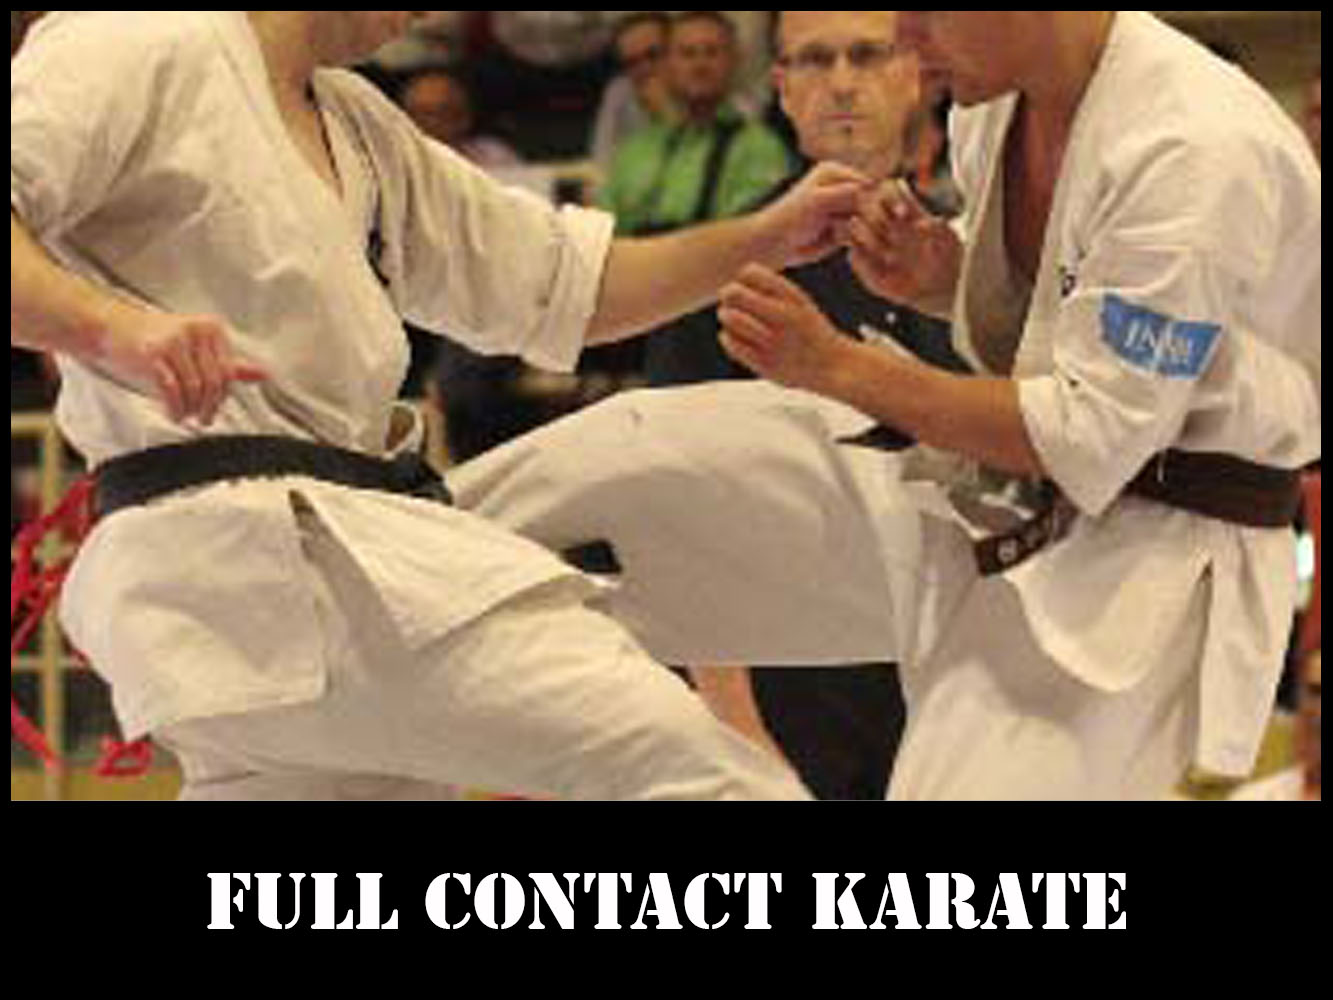 Full contact karate